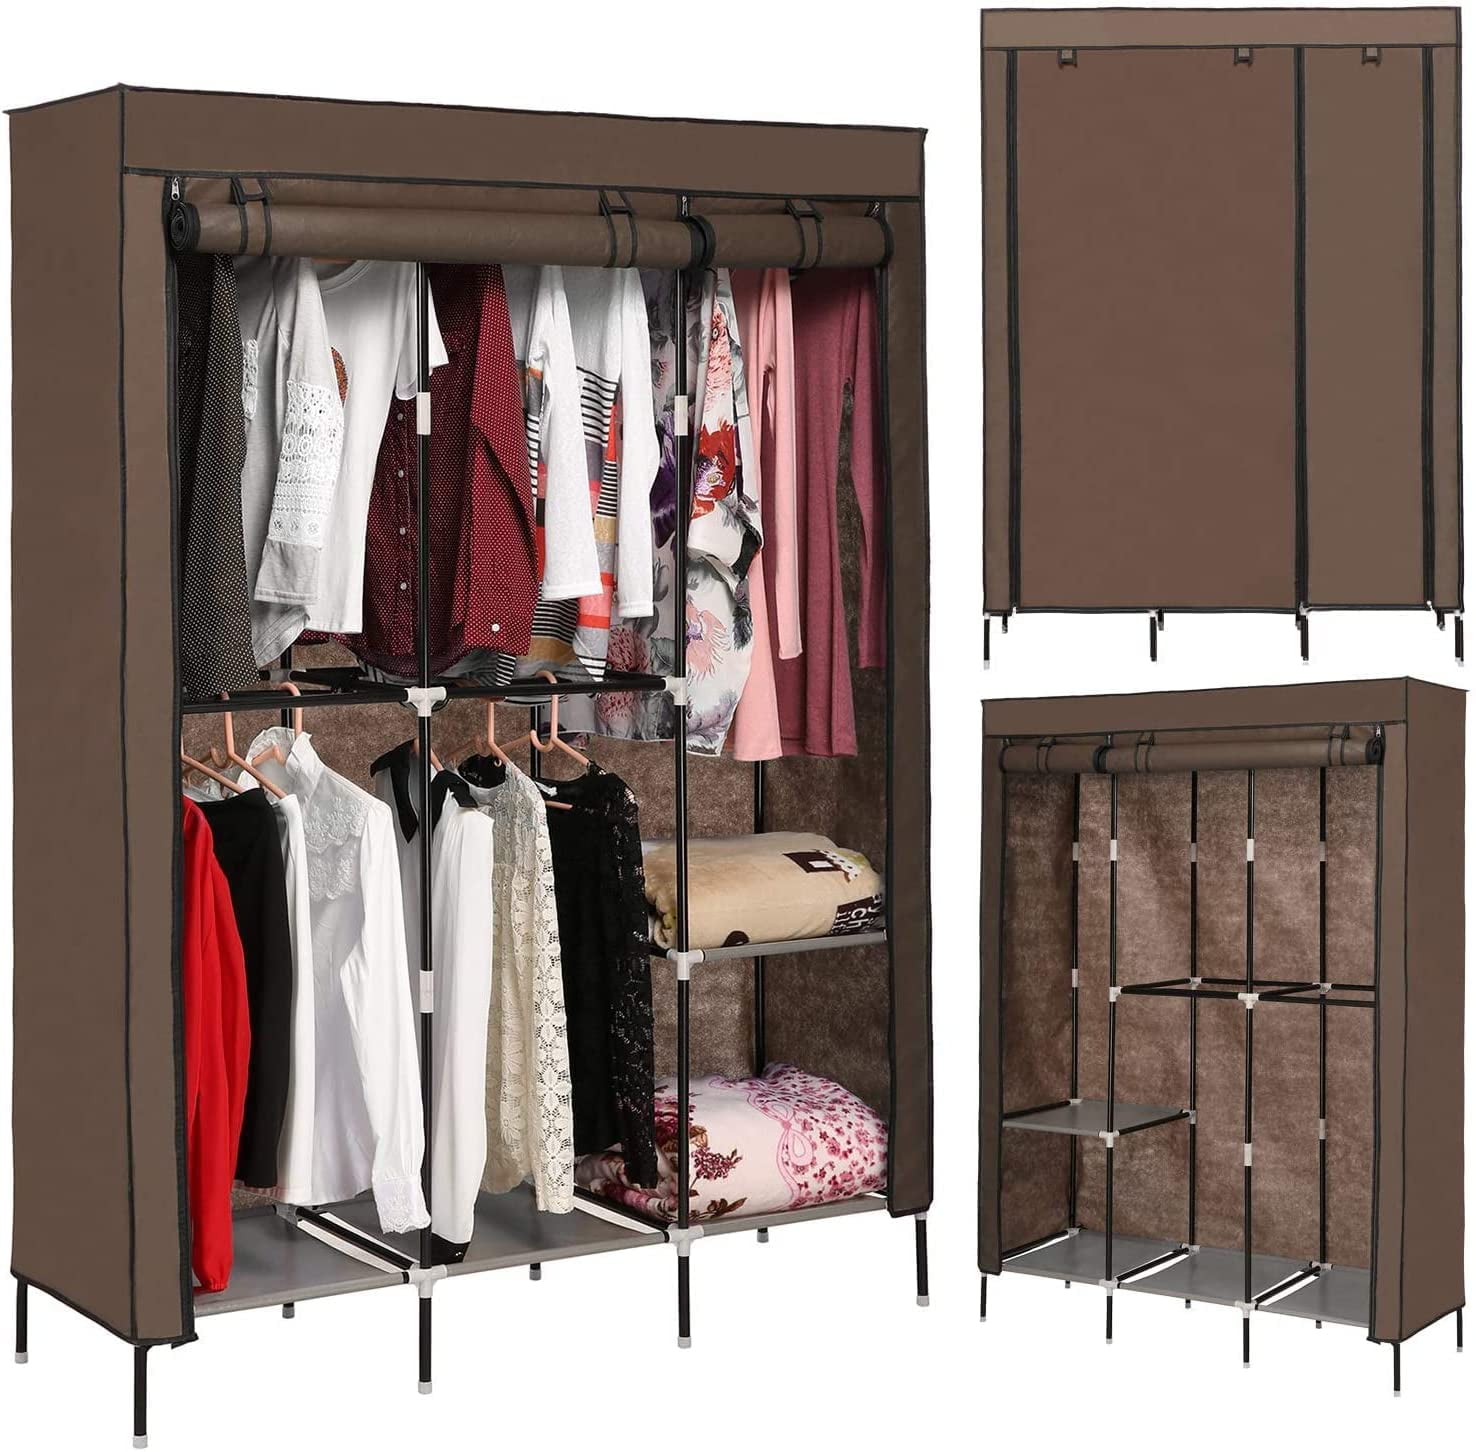 Details about   69" Closet Wardrobe Portable Clothes Storage Organizer w/ Metal Shelves Fabric 